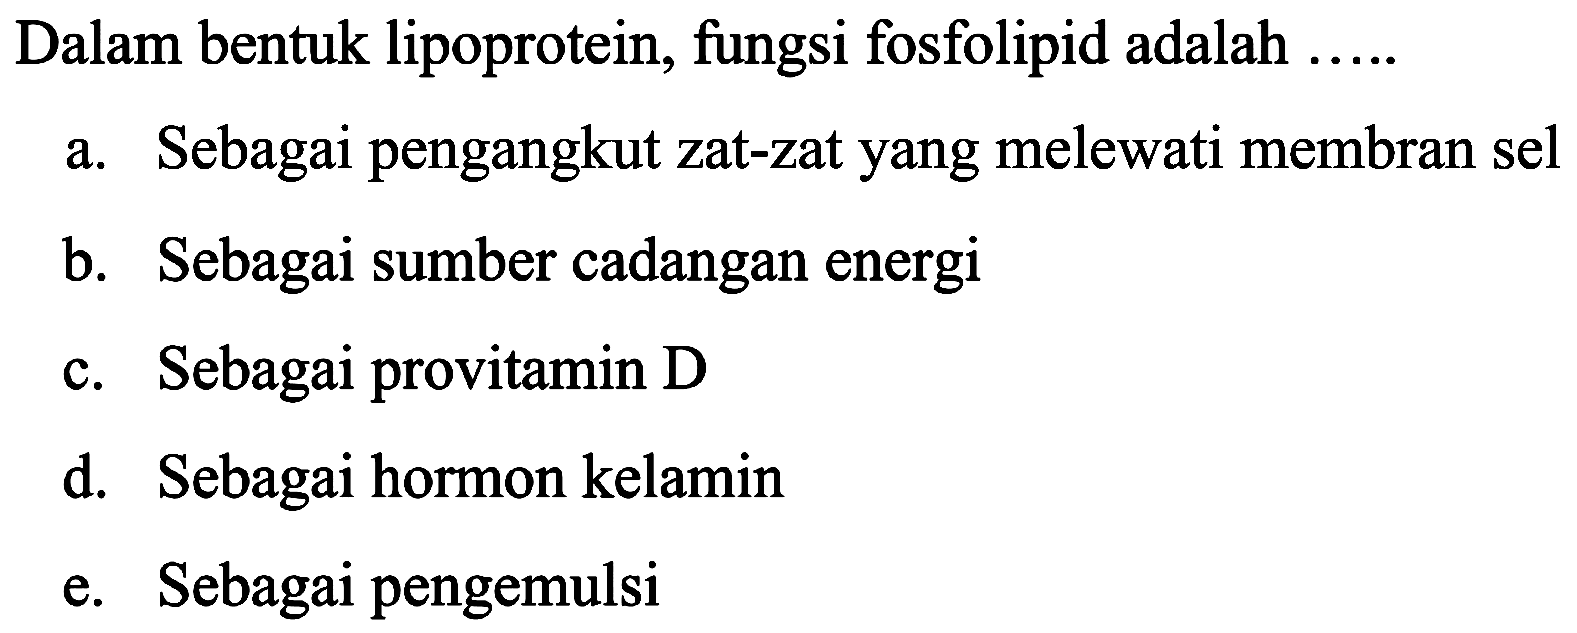 Dalam bentuk lipoprotein, fungsi fosfolipid adalah .....
a. Sebagai pengangkut zat-zat yang melewati membran sel
b. Sebagai sumber cadangan energi
c. Sebagai provitamin D
d. Sebagai hormon kelamin
e. Sebagai pengemulsi